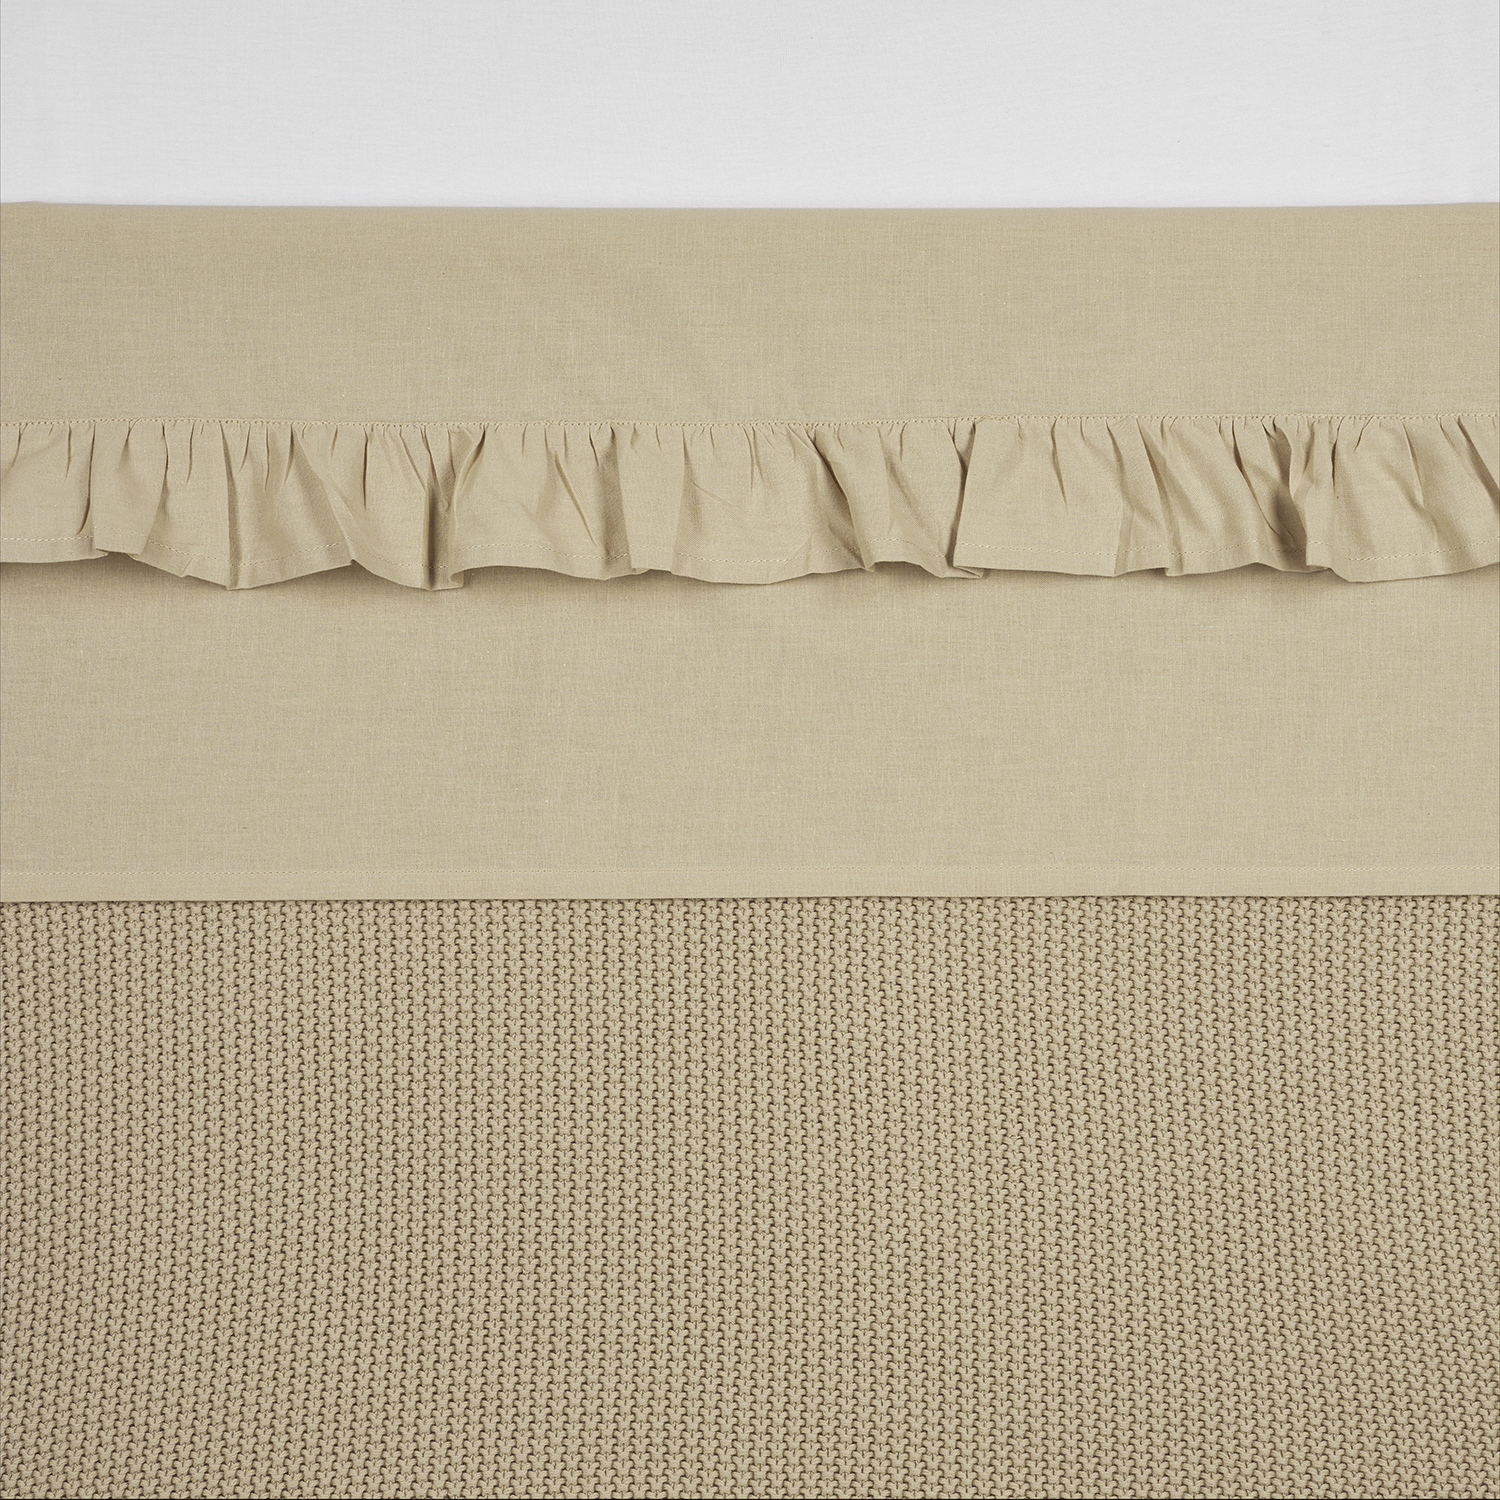 Bettlaken groß Ruffle - Sand - 100x150cm